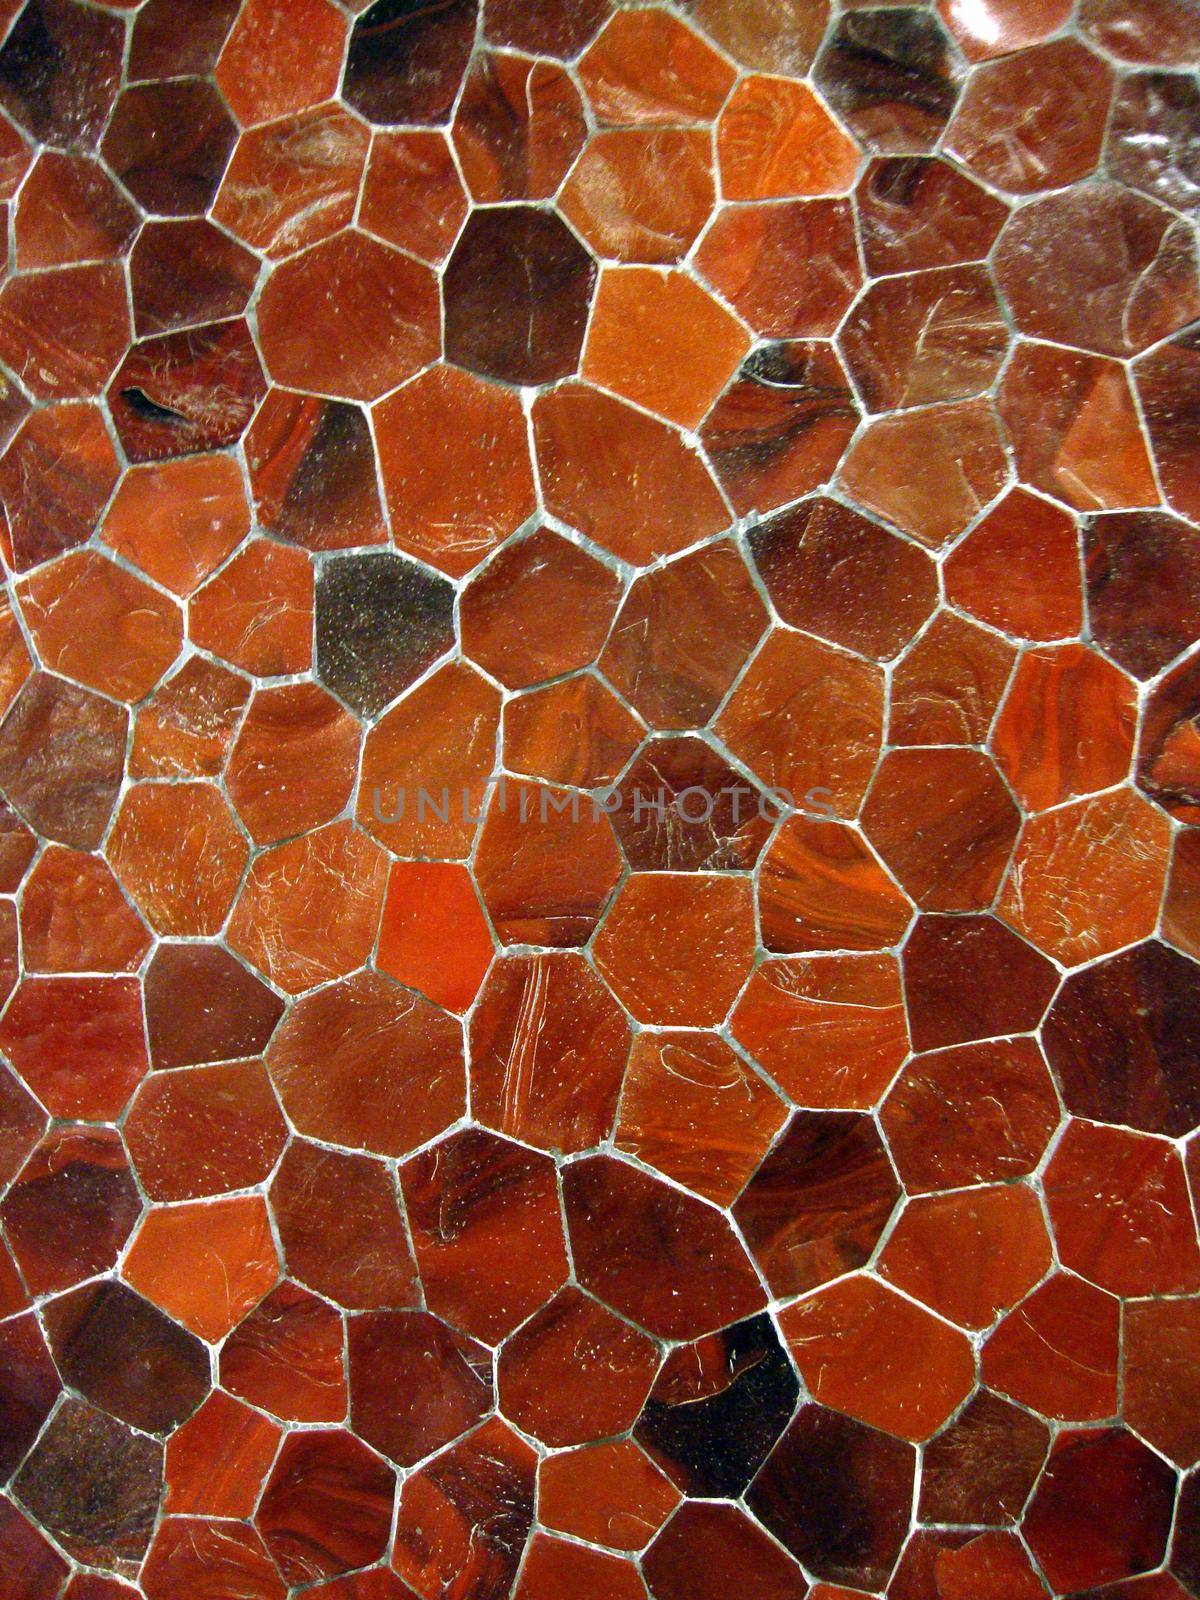 Shades of Orange tile mosaic pattern                               